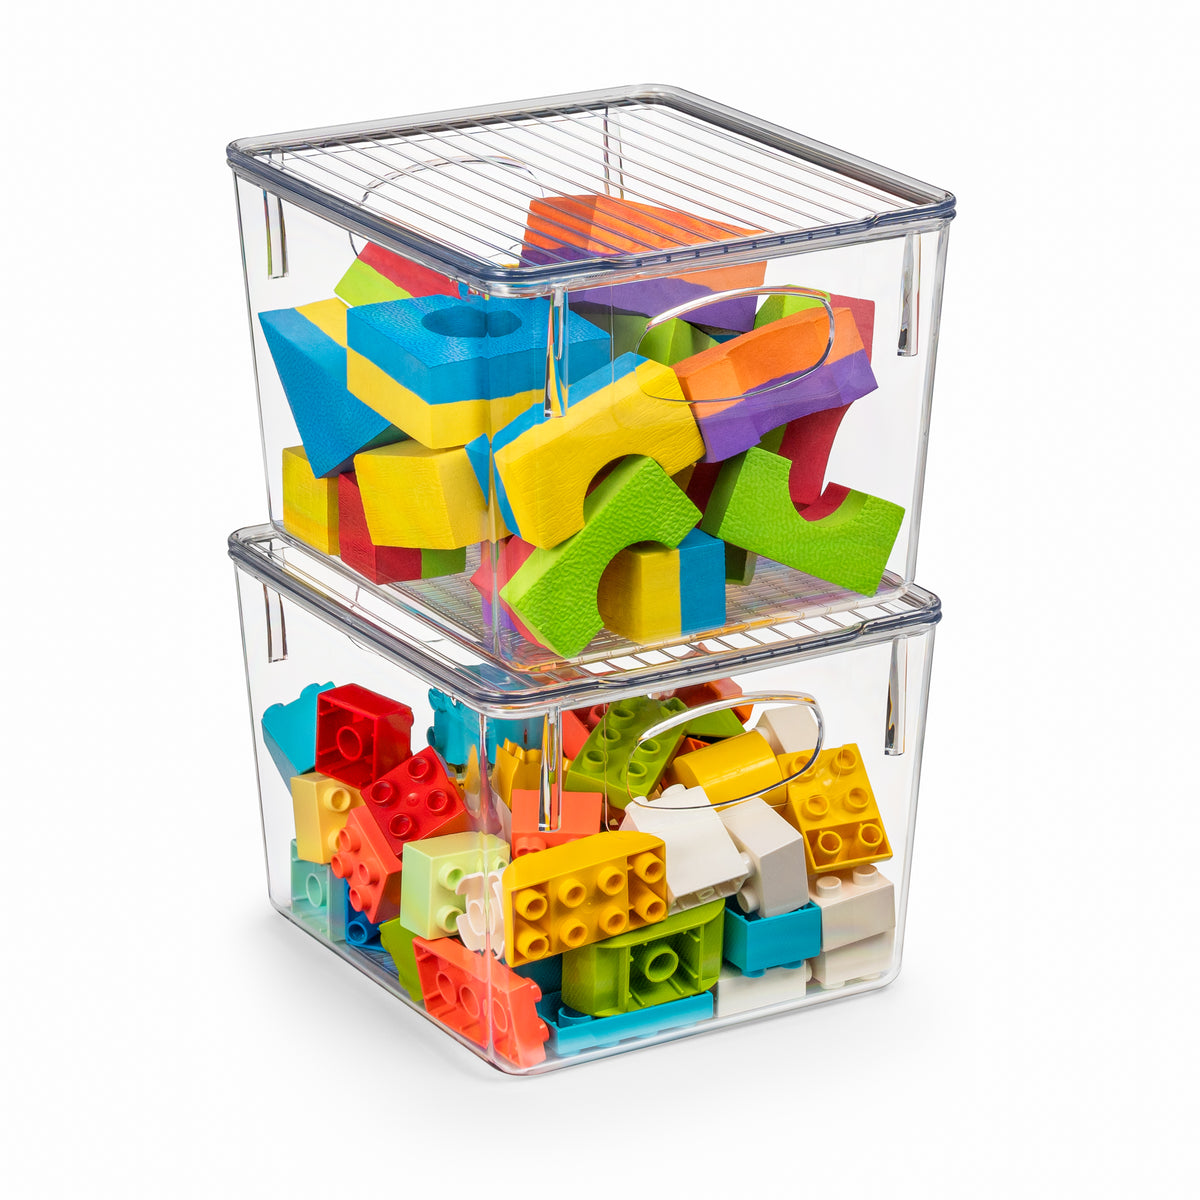 Clear Plastic Bins w/ Lids for Toys (Medium)